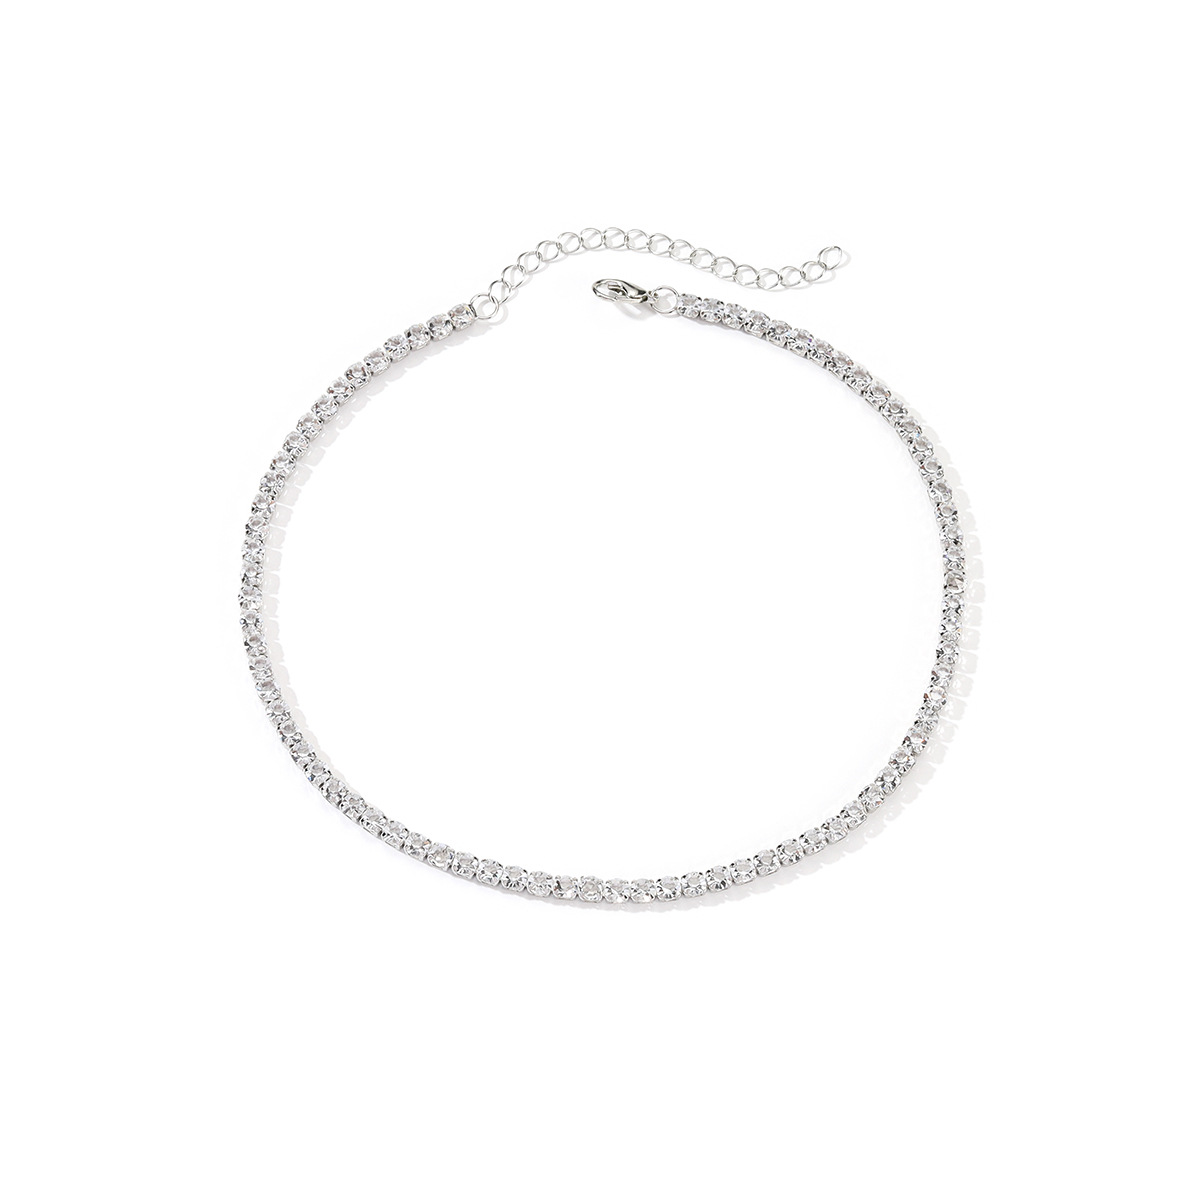 4:Transparent silver necklace